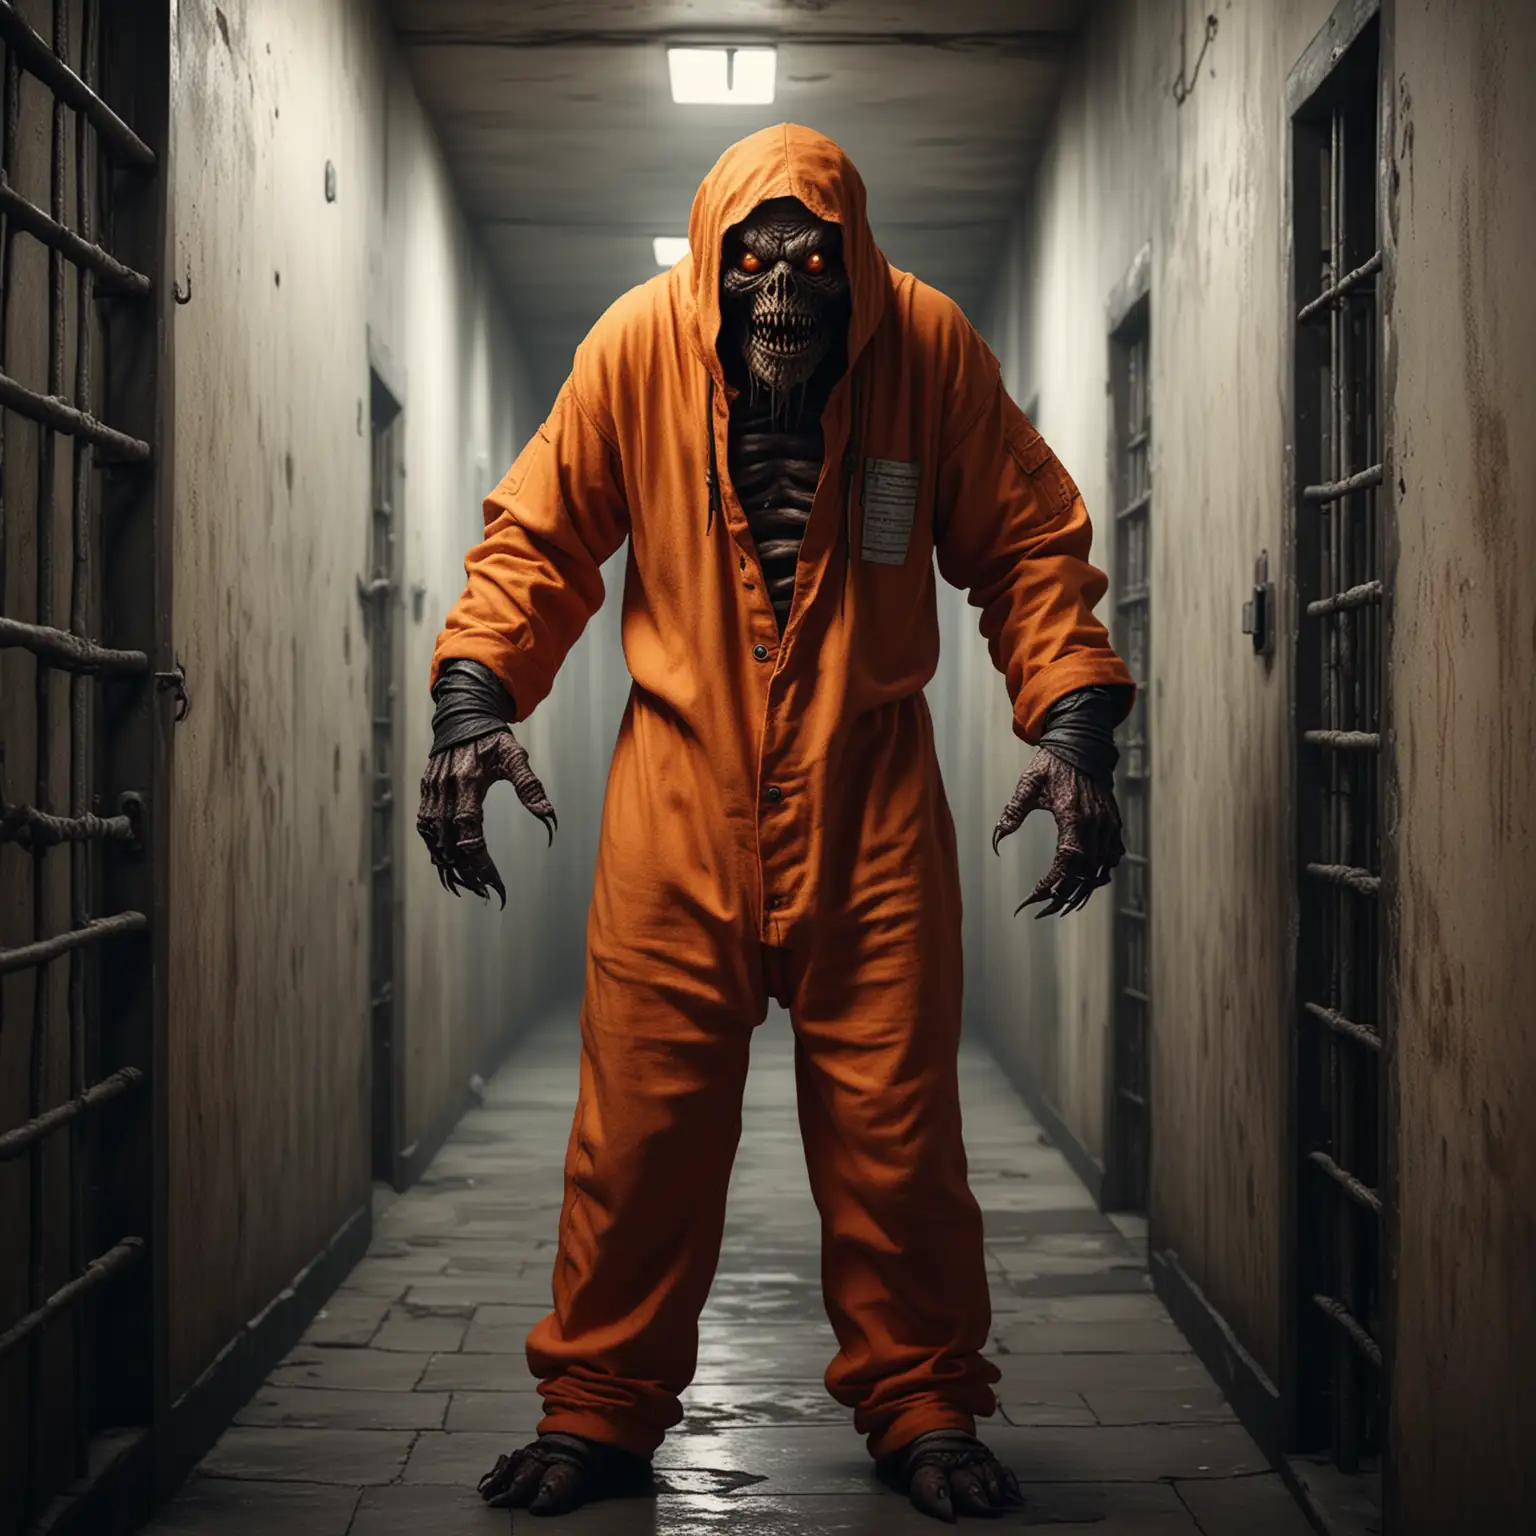 Terrifying Monster Creature in Orange Prisoner Clothes Stands in Prison Corridor